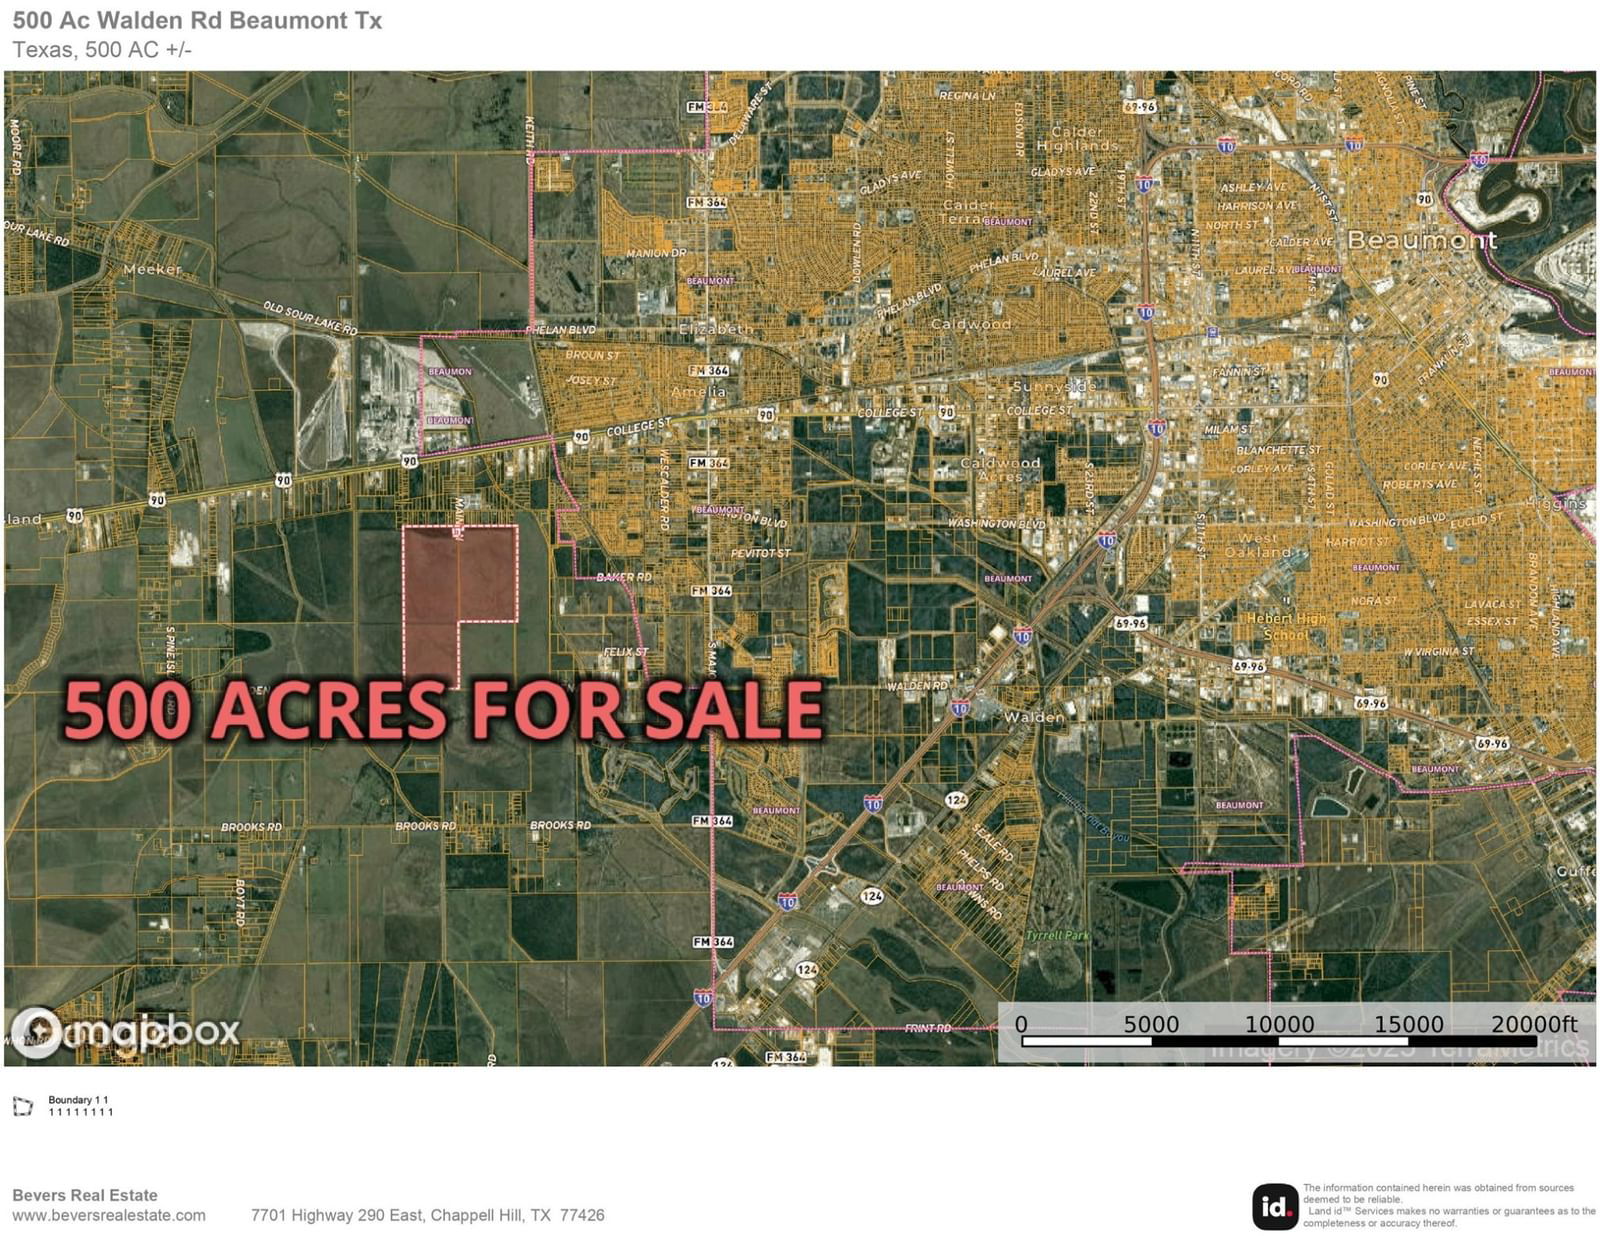 Real estate property located at 1368 Walden Rd, Jefferson, Garden Villas, Beaumont, TX, US